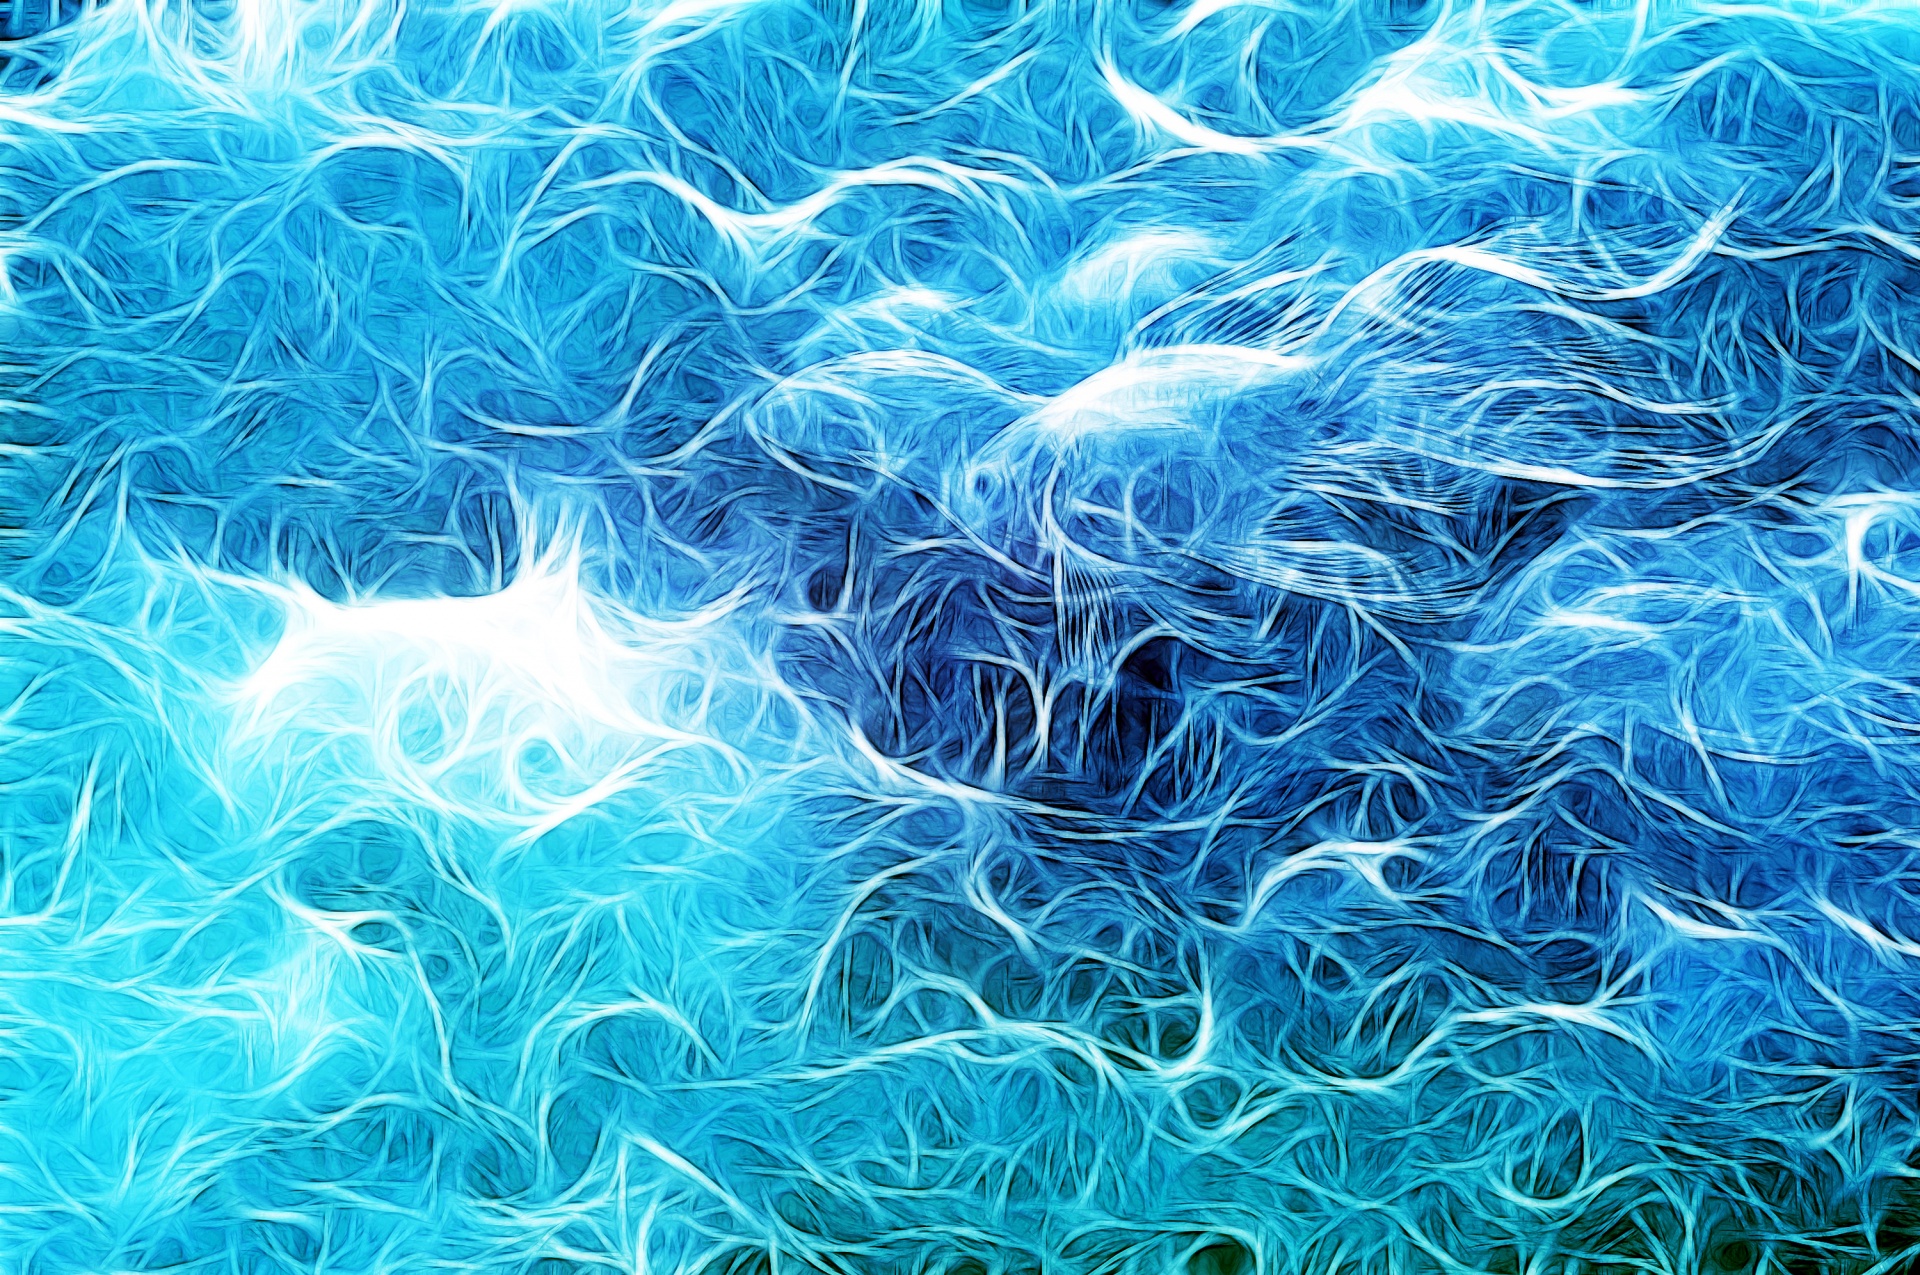 Fractal occean waves artistic background